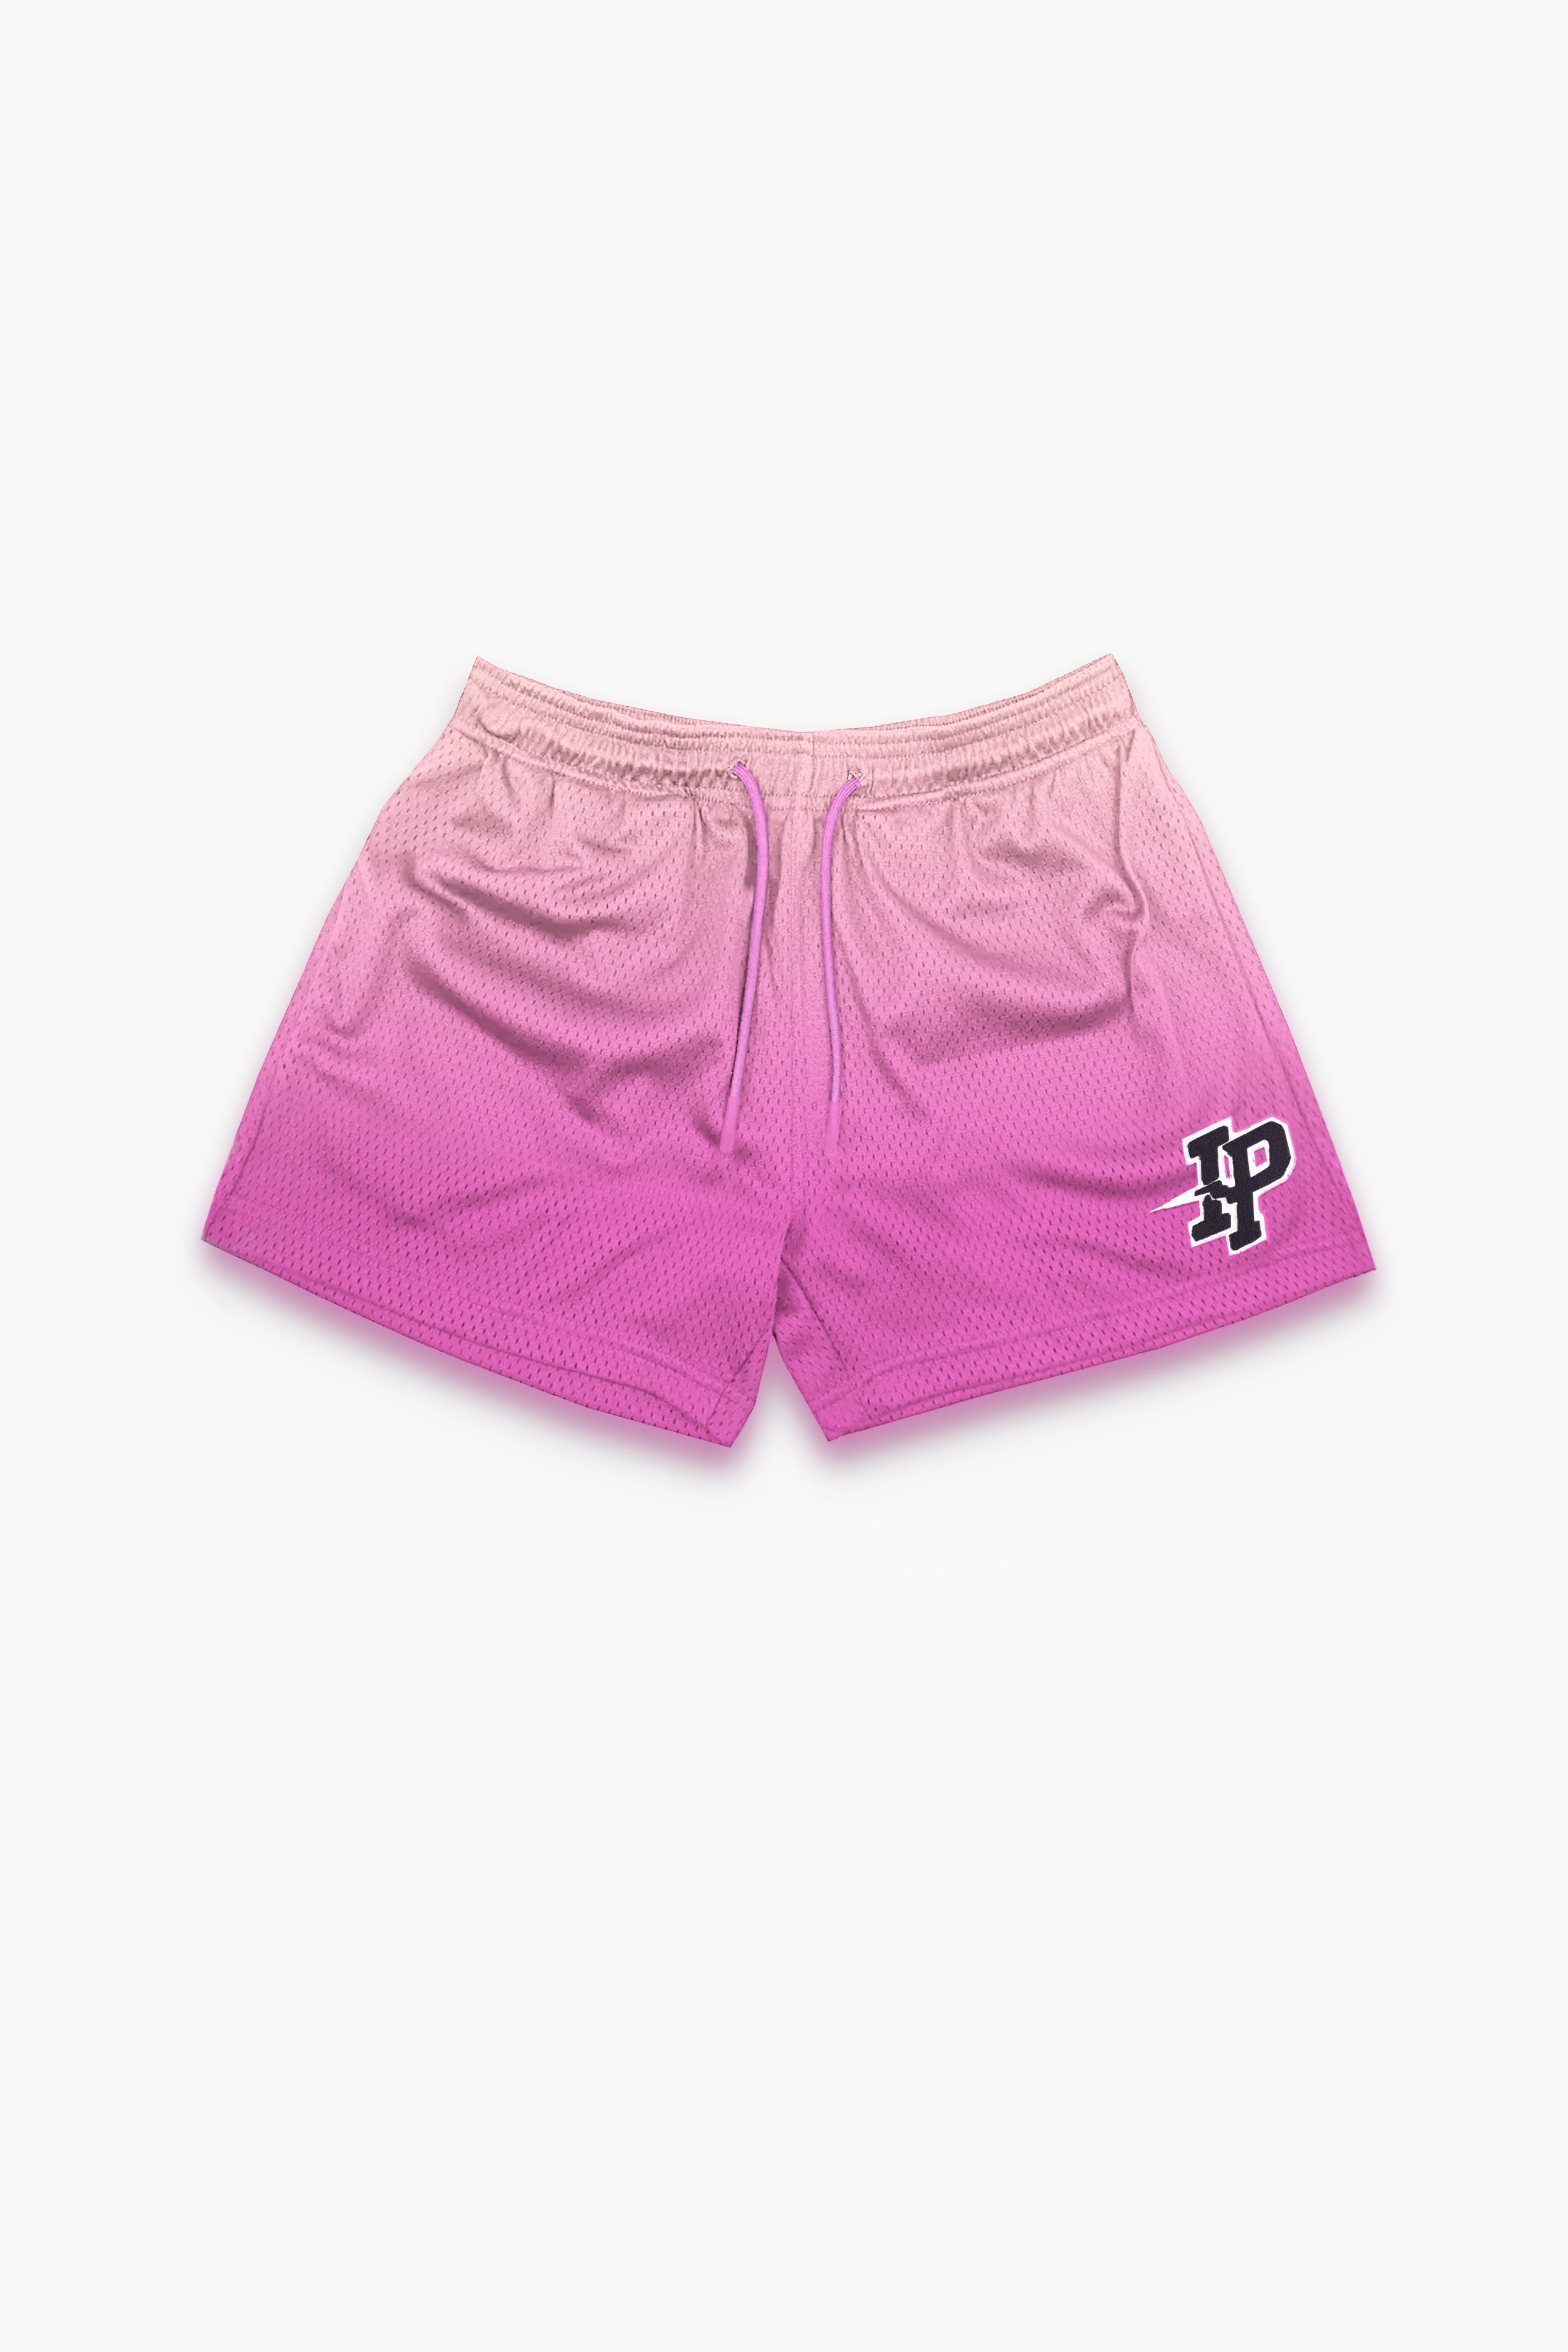 Women's Graphic Mesh Shorts - Pink Gradient